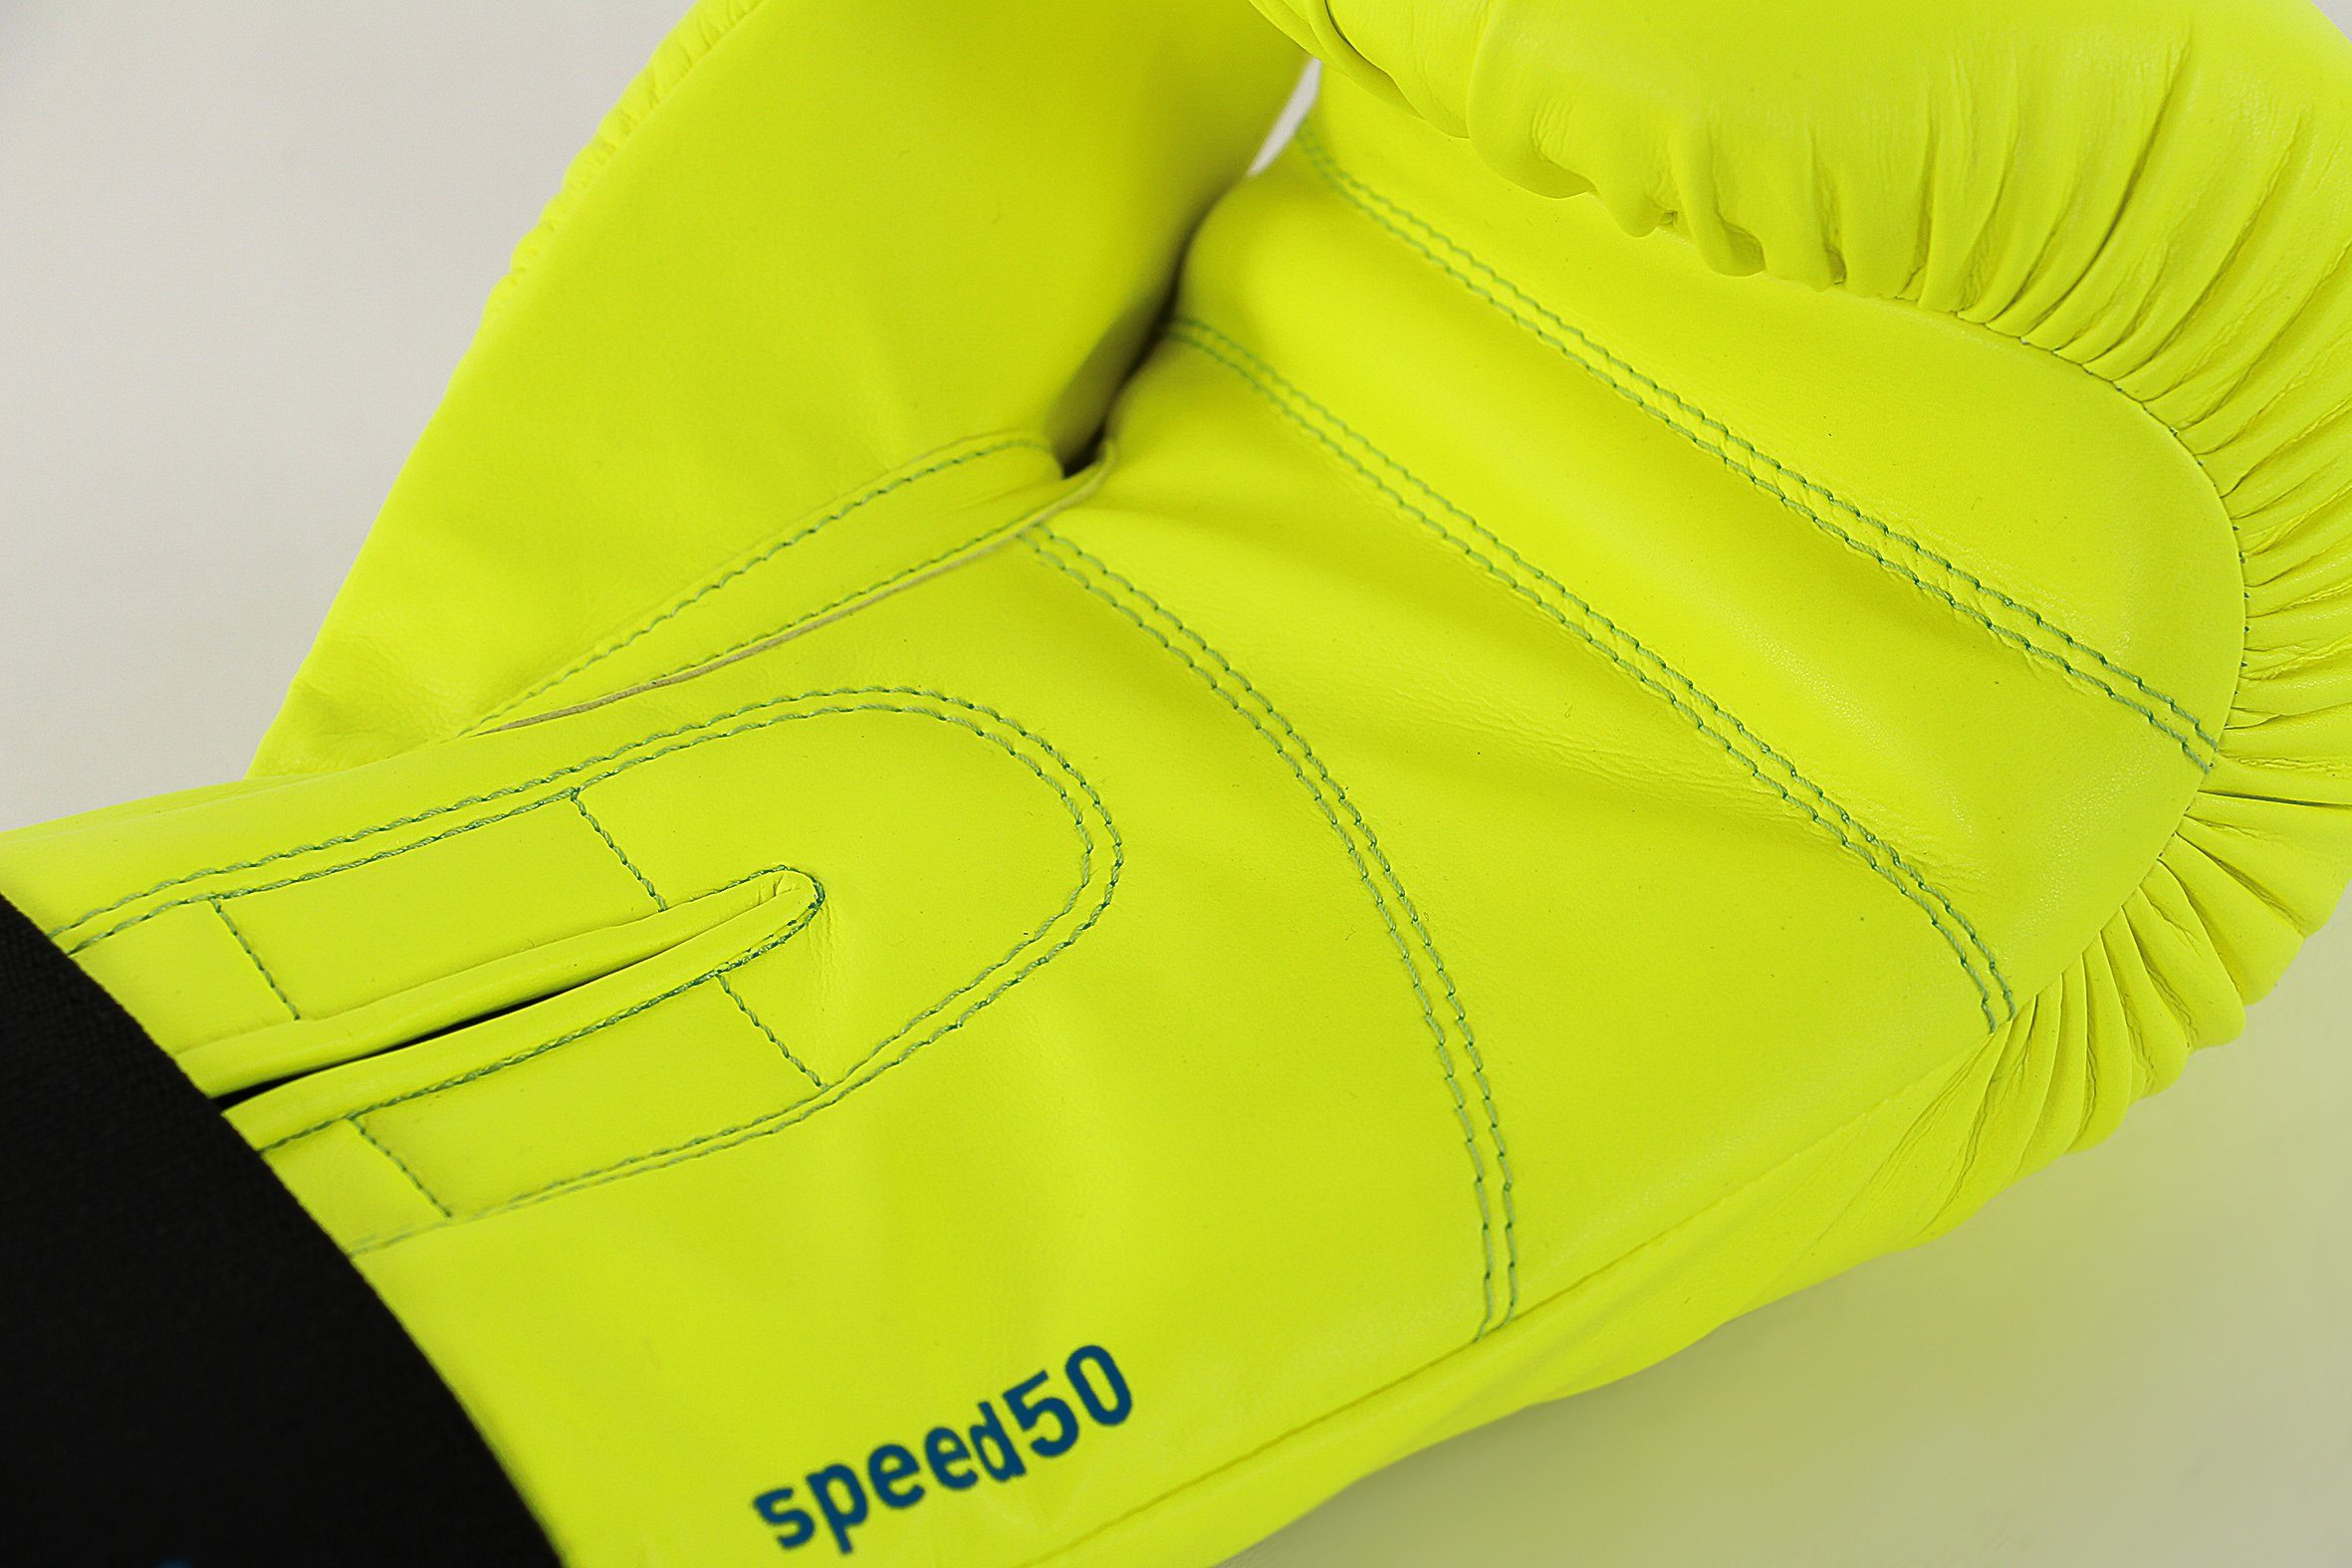 50 blau/gelb Speed Performance adidas Boxhandschuhe